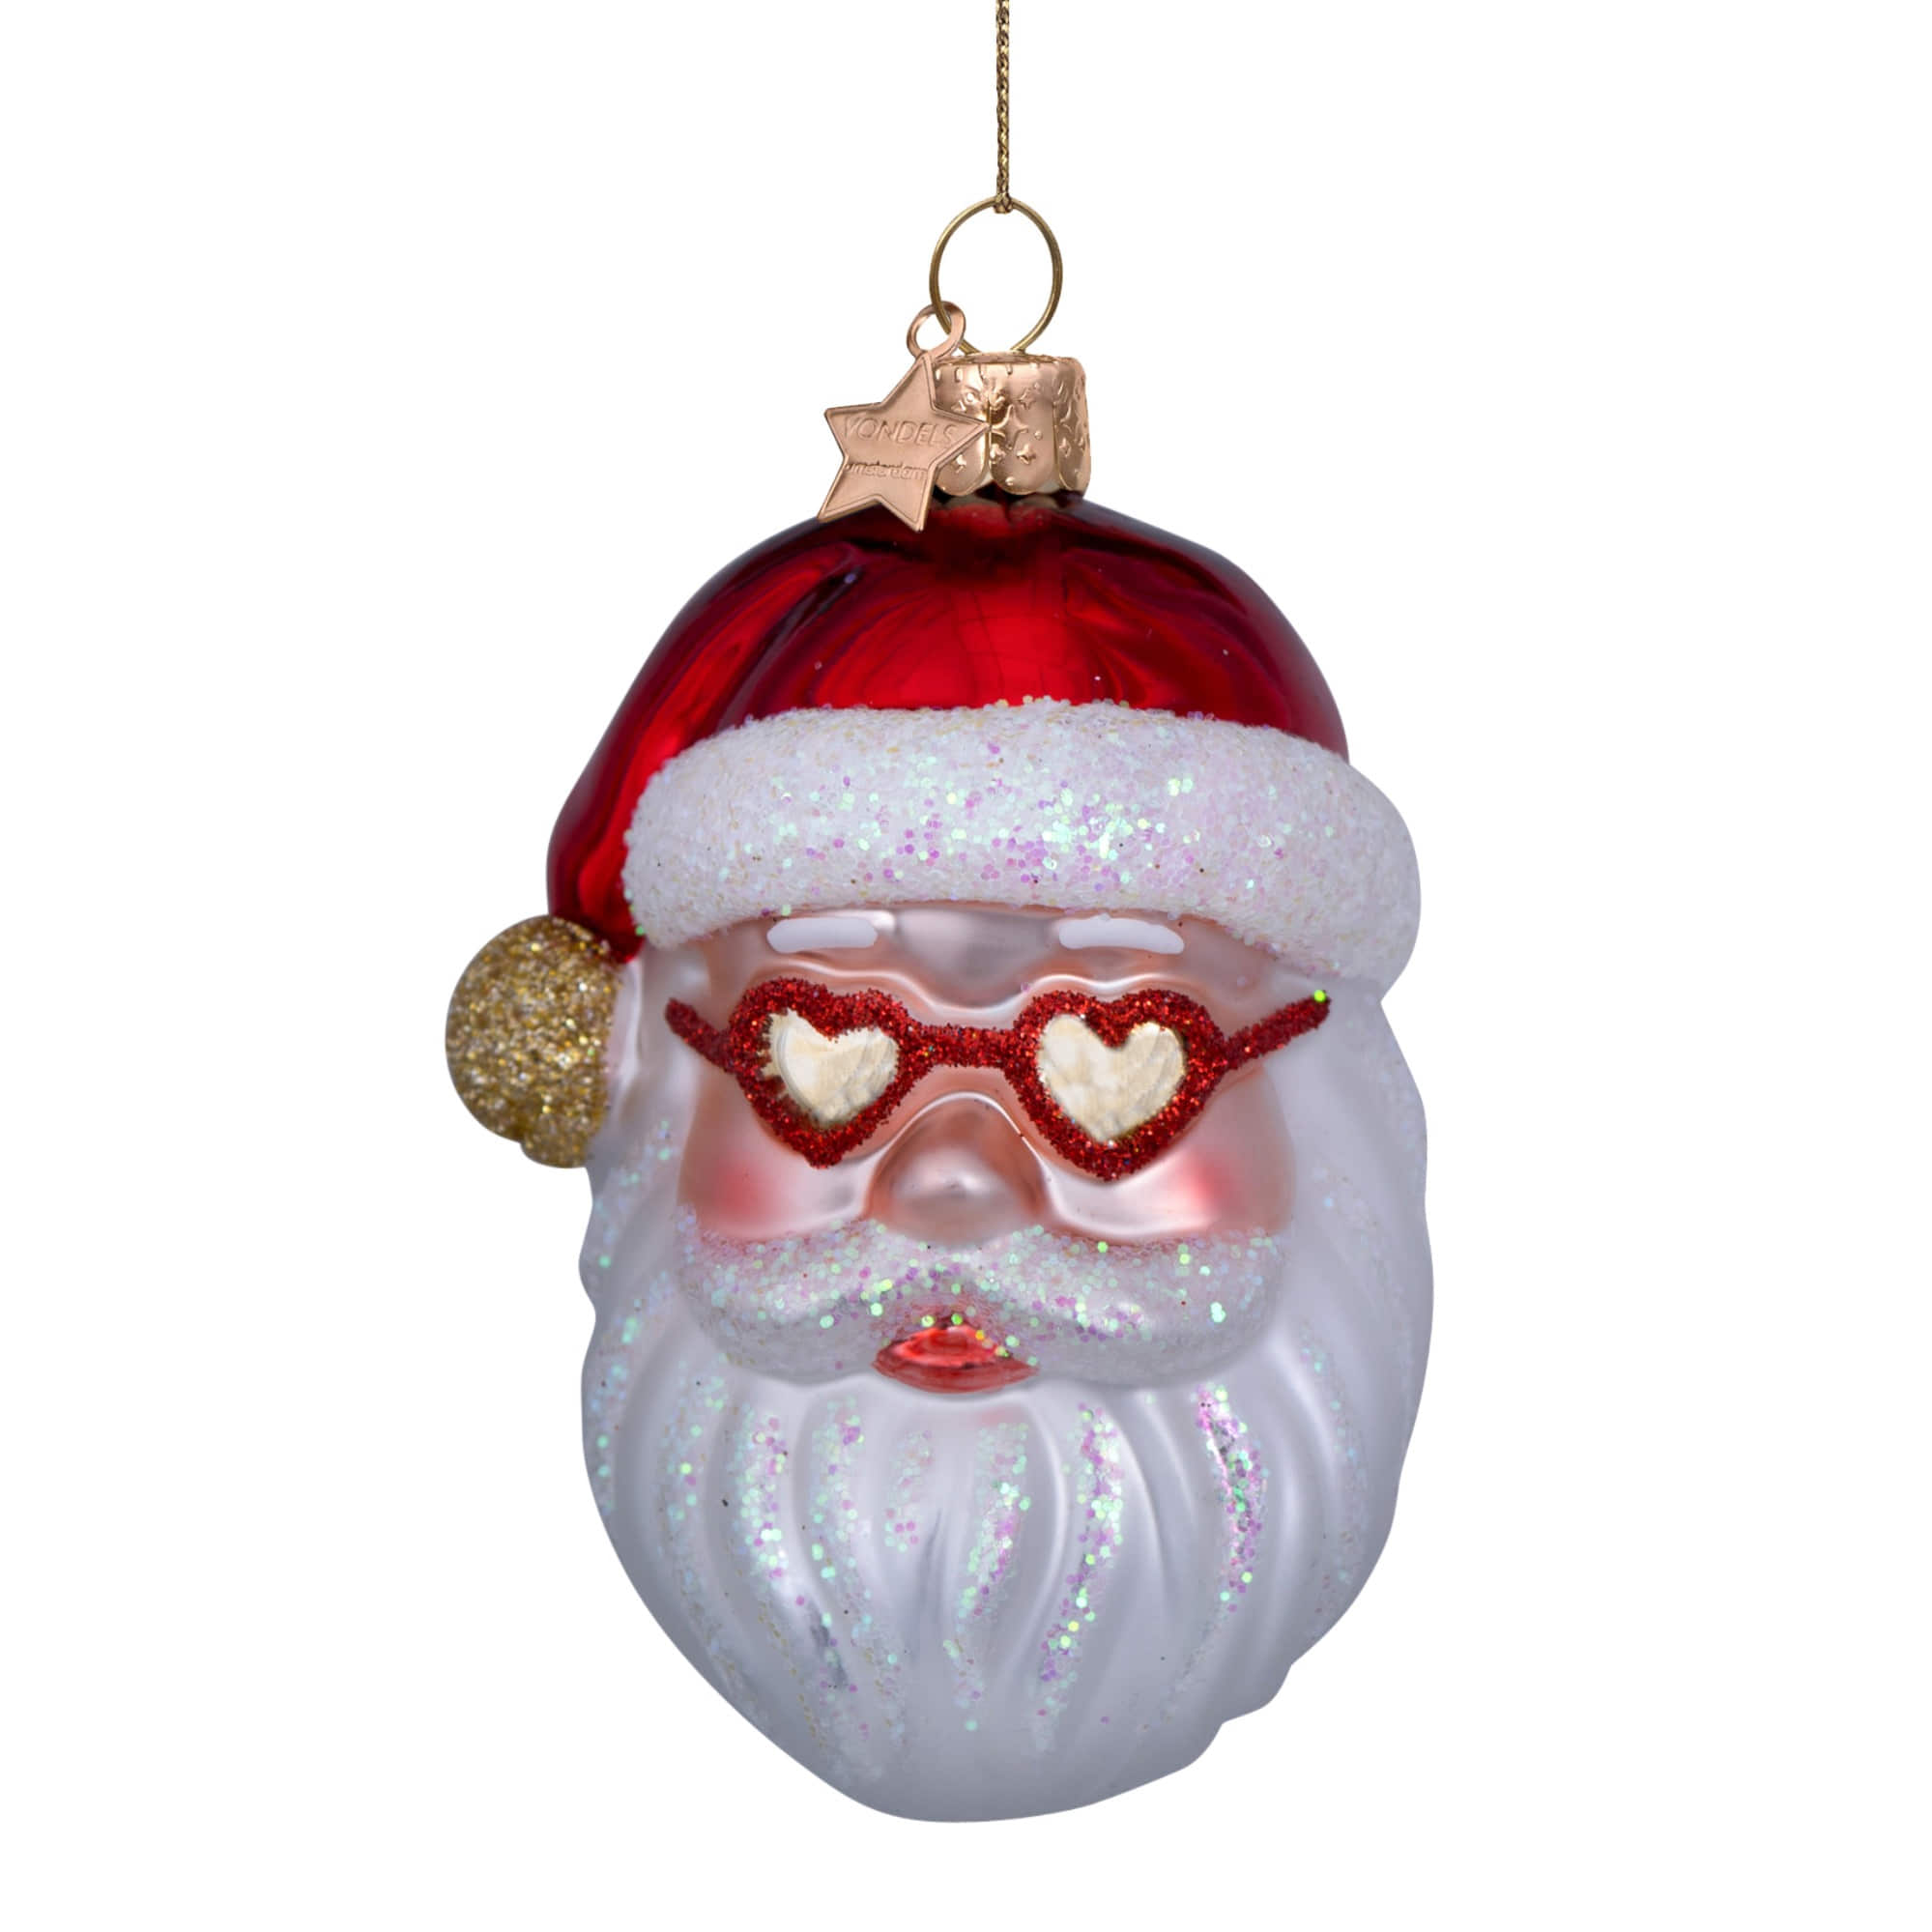 VONDELS Ornament Glass Red Santa with Heart Glasses